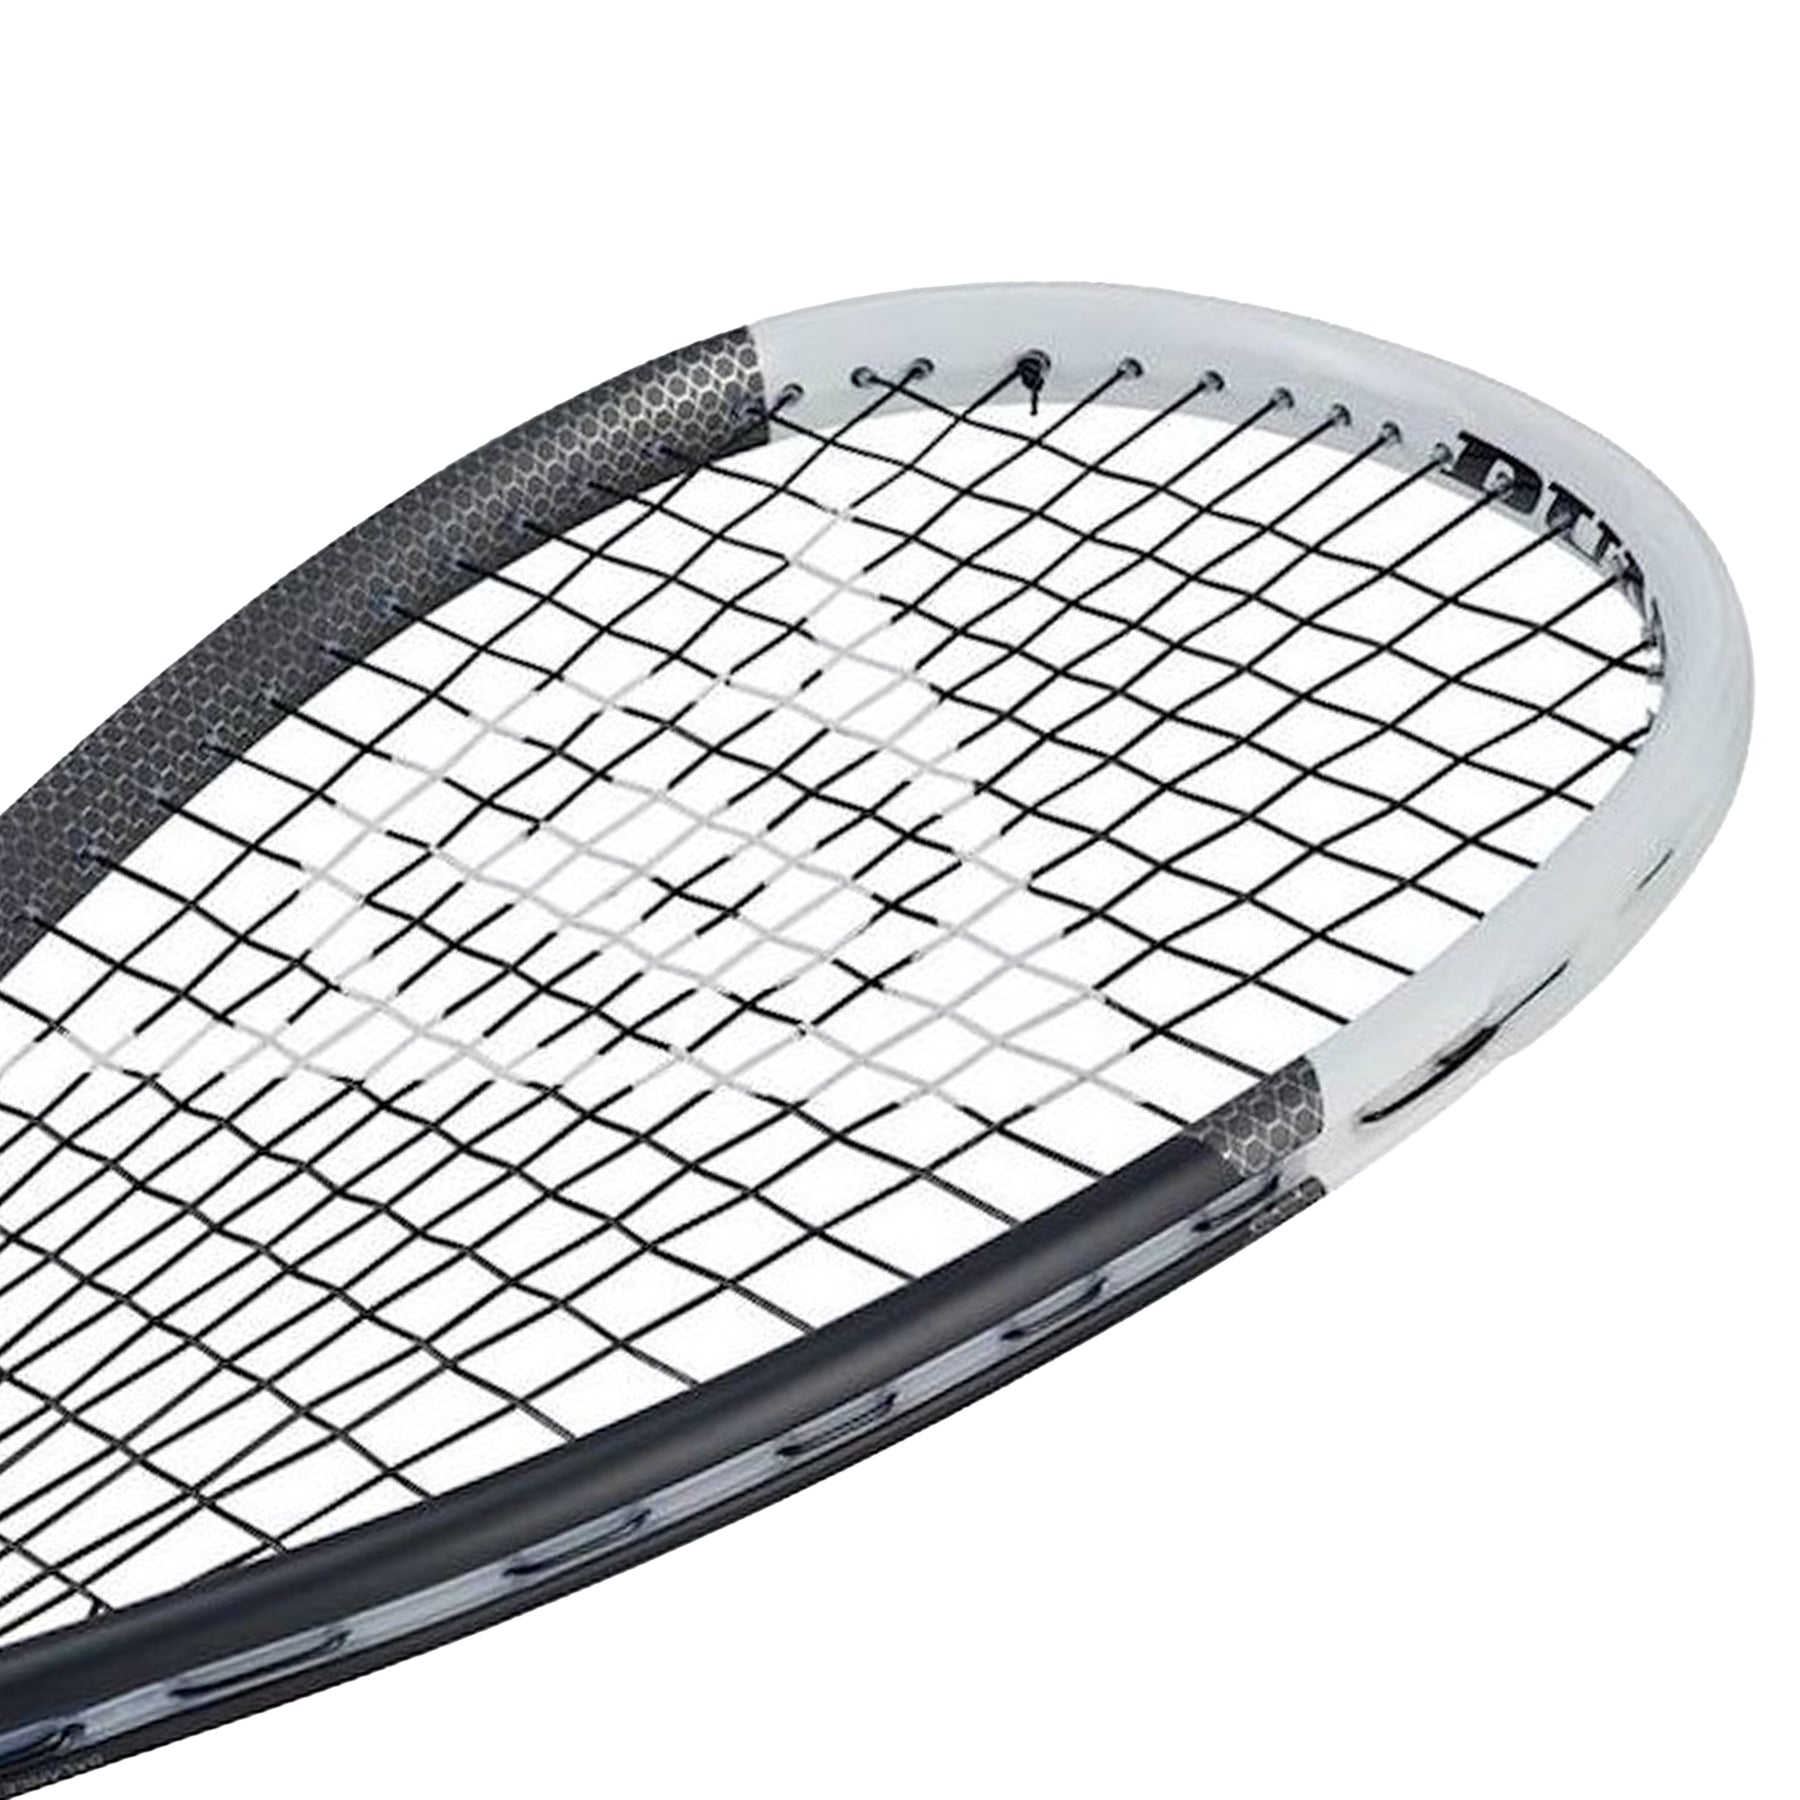 Dunlop Blackstorm TI Squash Racket